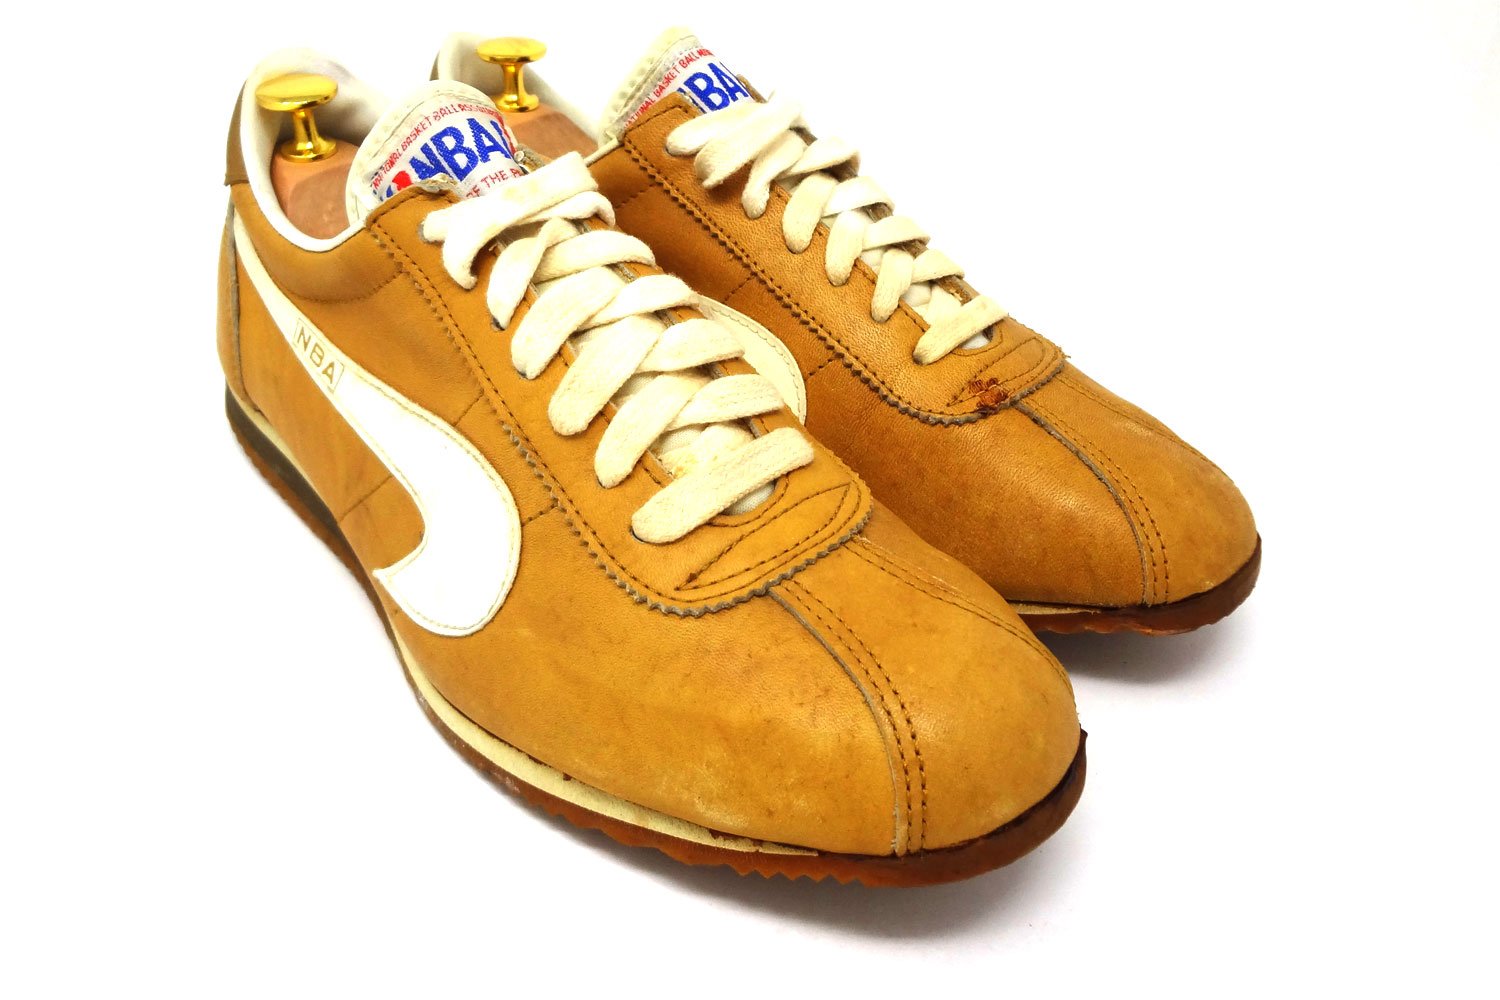 The Deffest®. A vintage and retro sneaker blog. — Kinney NBA 1977 upside  down swoosh vintage sneakers